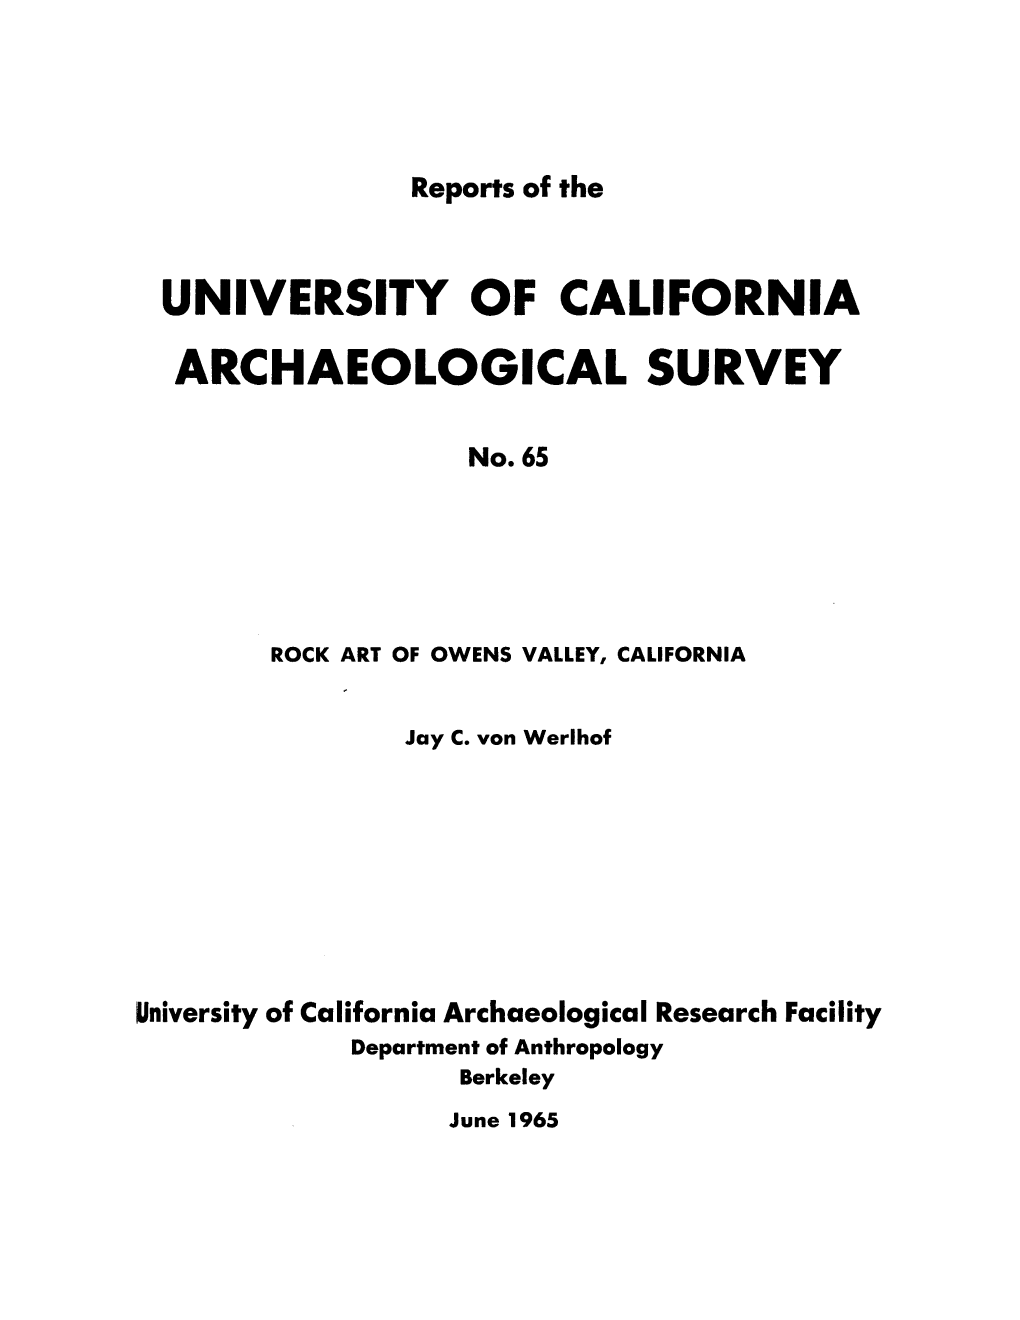 University of California Archaeological Survey